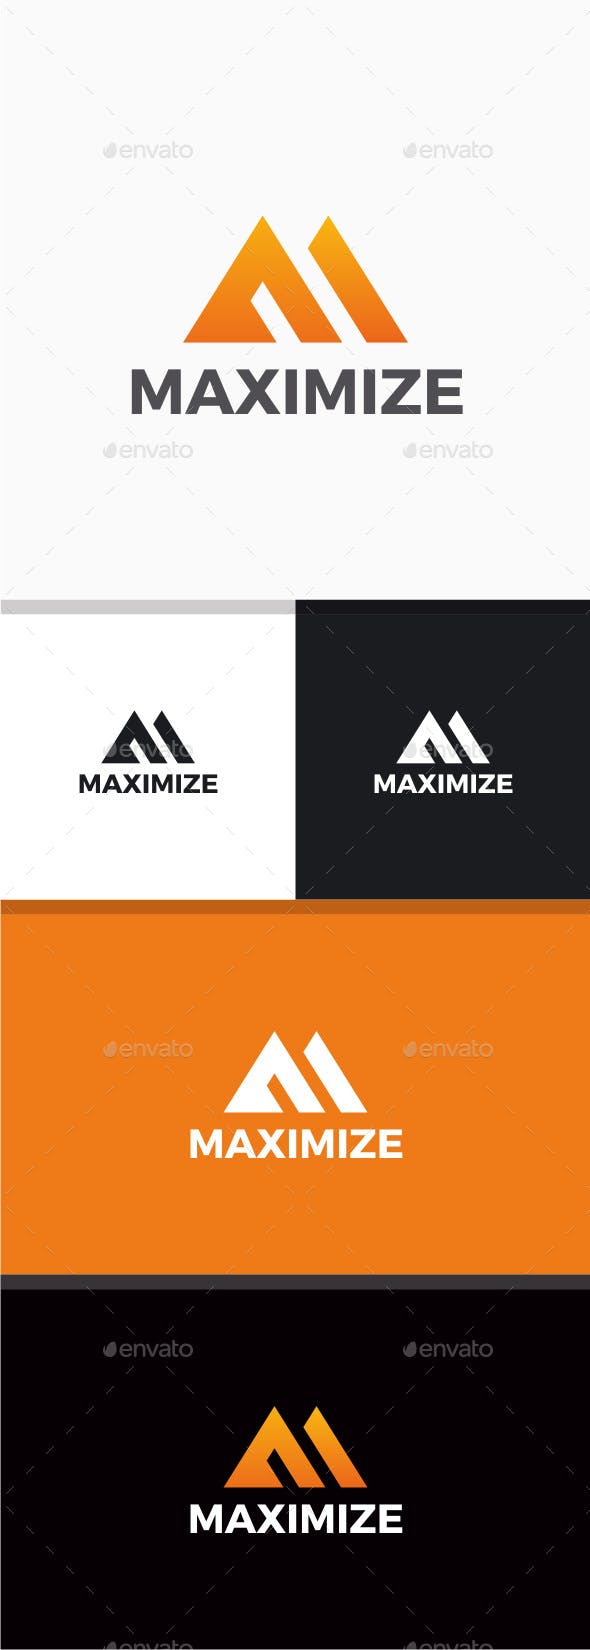 Orange Triangle M Logo - Maximize - Letter M Logo by yopie | GraphicRiver